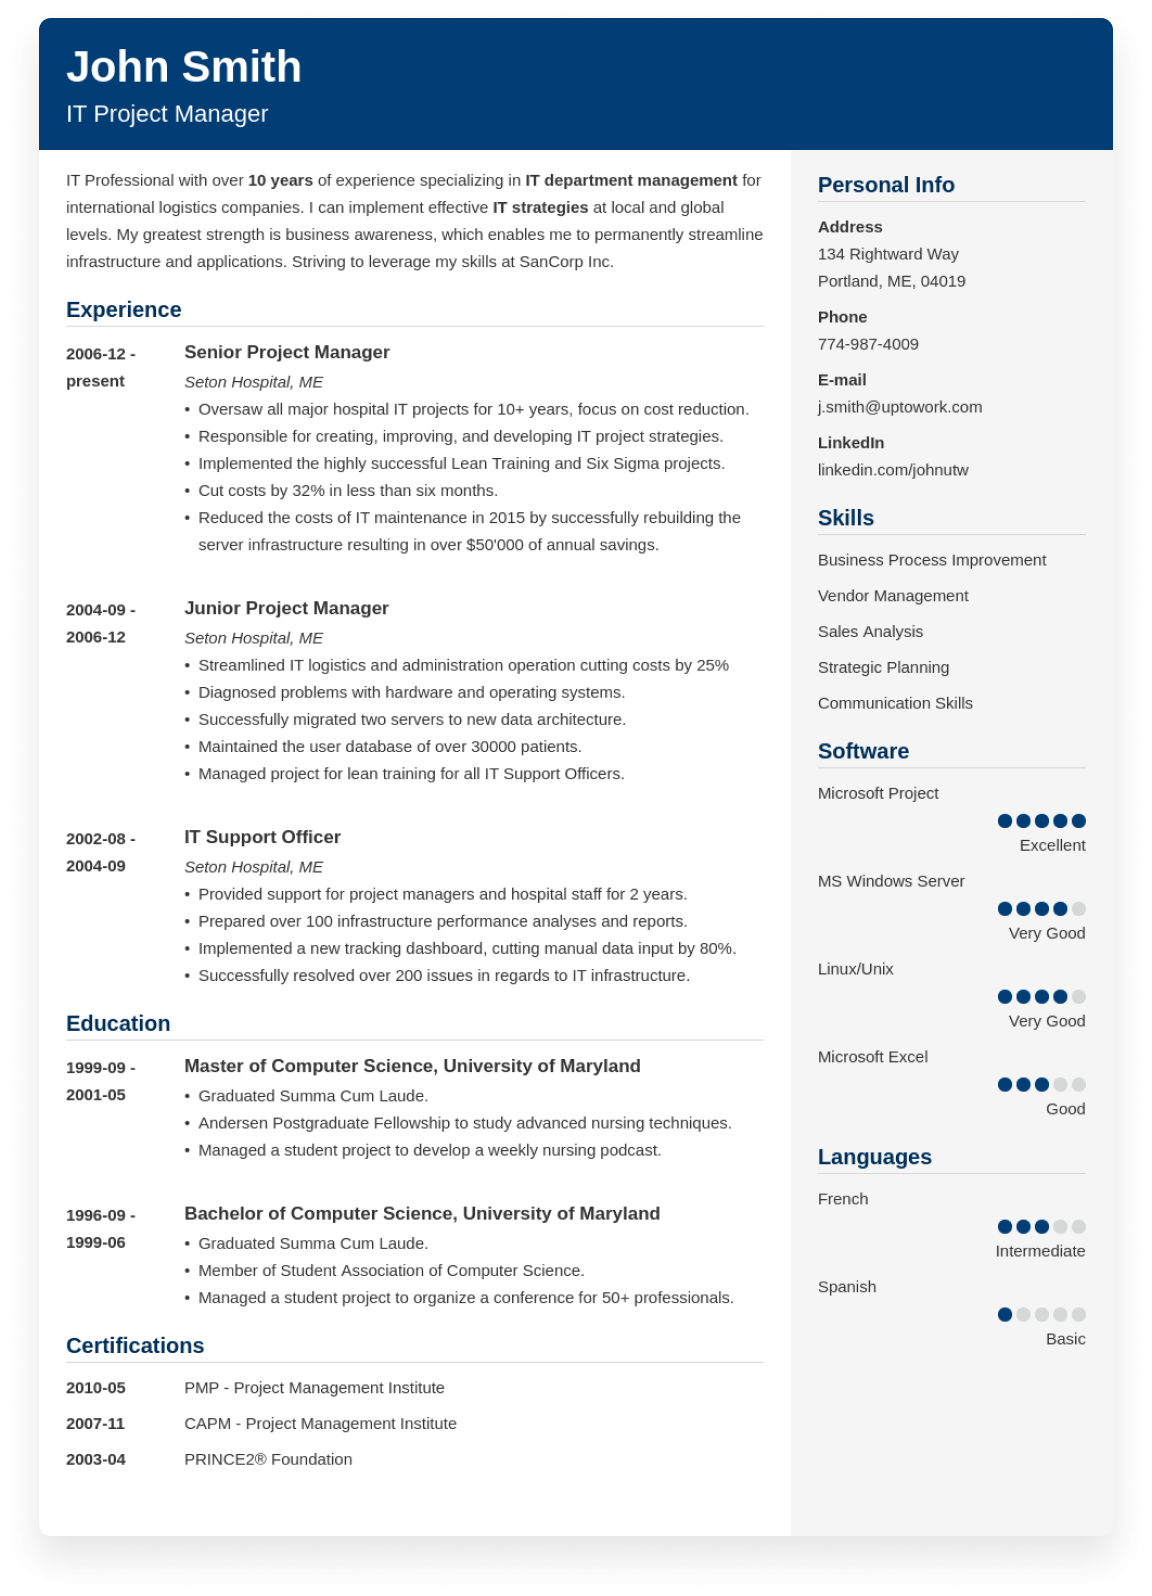 Resume Example Built with ResumeLab Builder